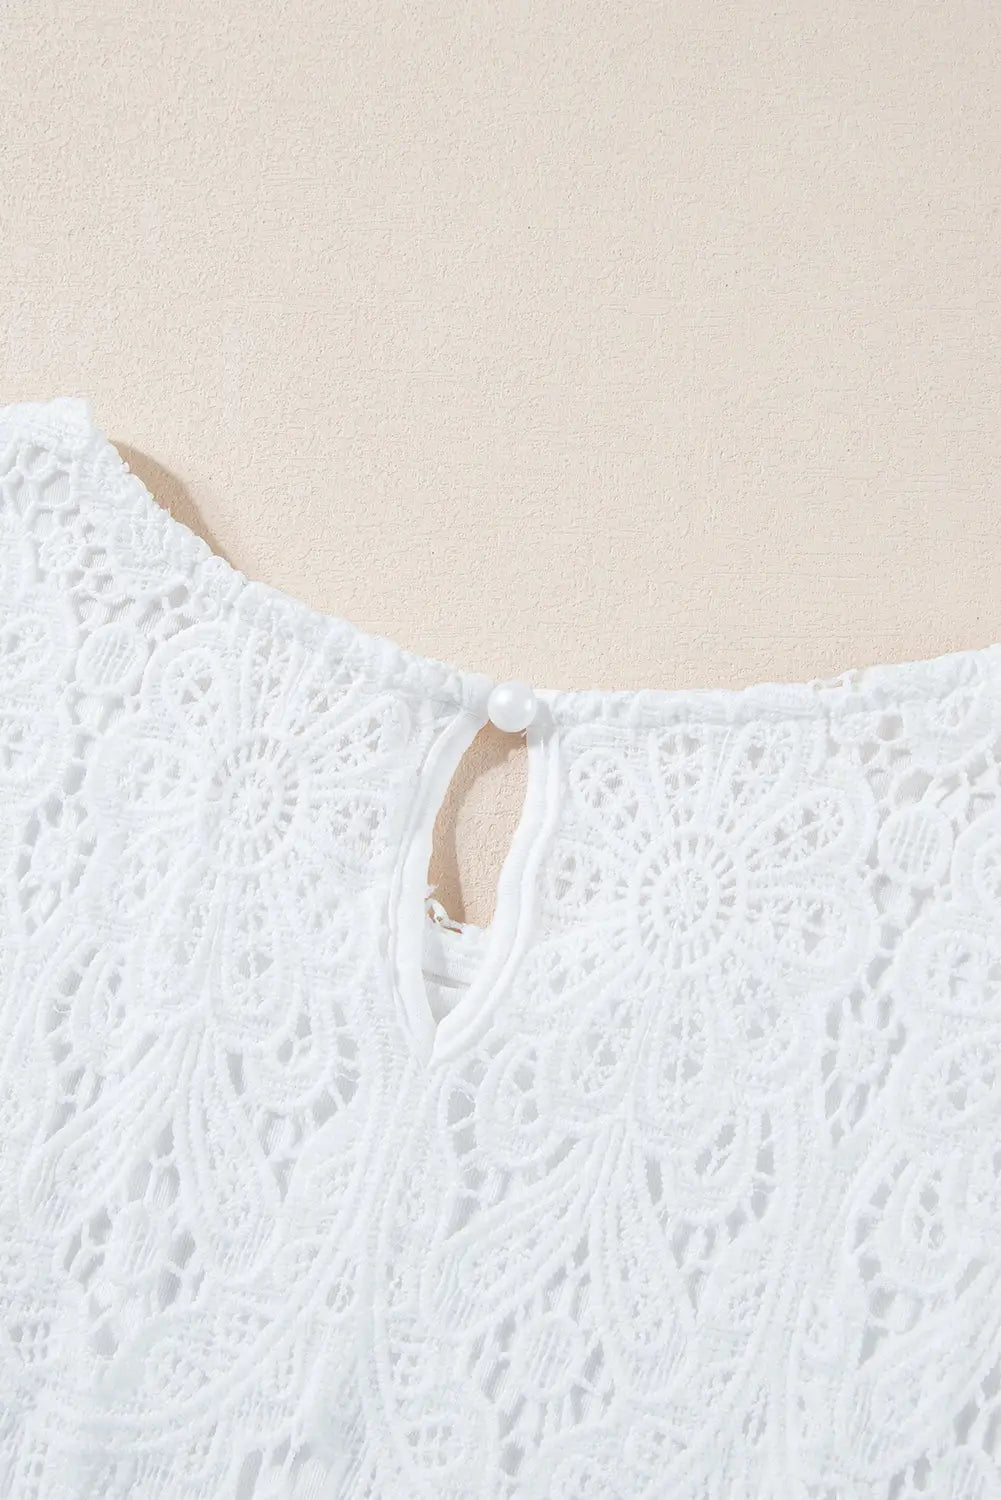 White crochet lace short sleeve blouse - tops